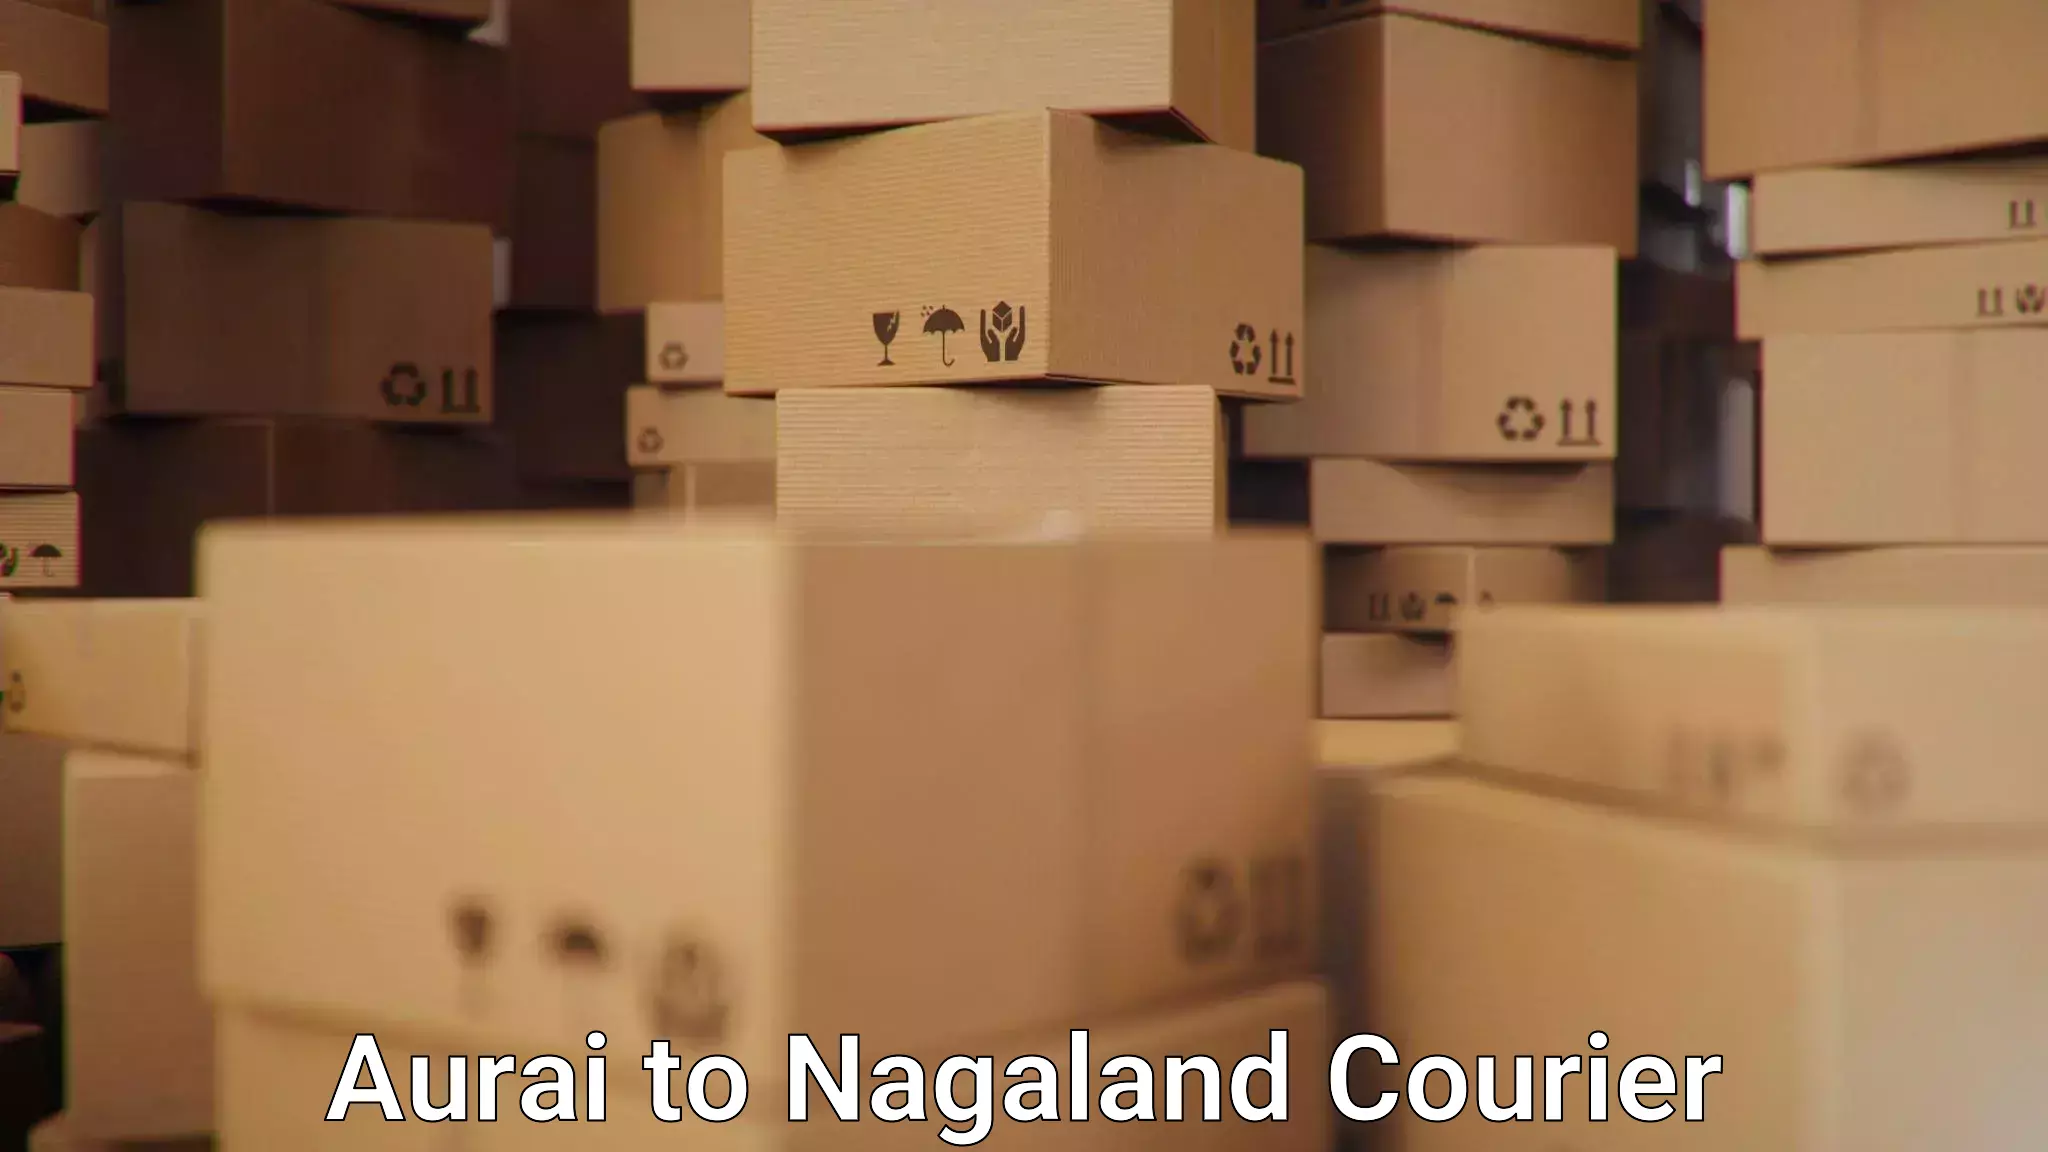 Courier app Aurai to Nagaland